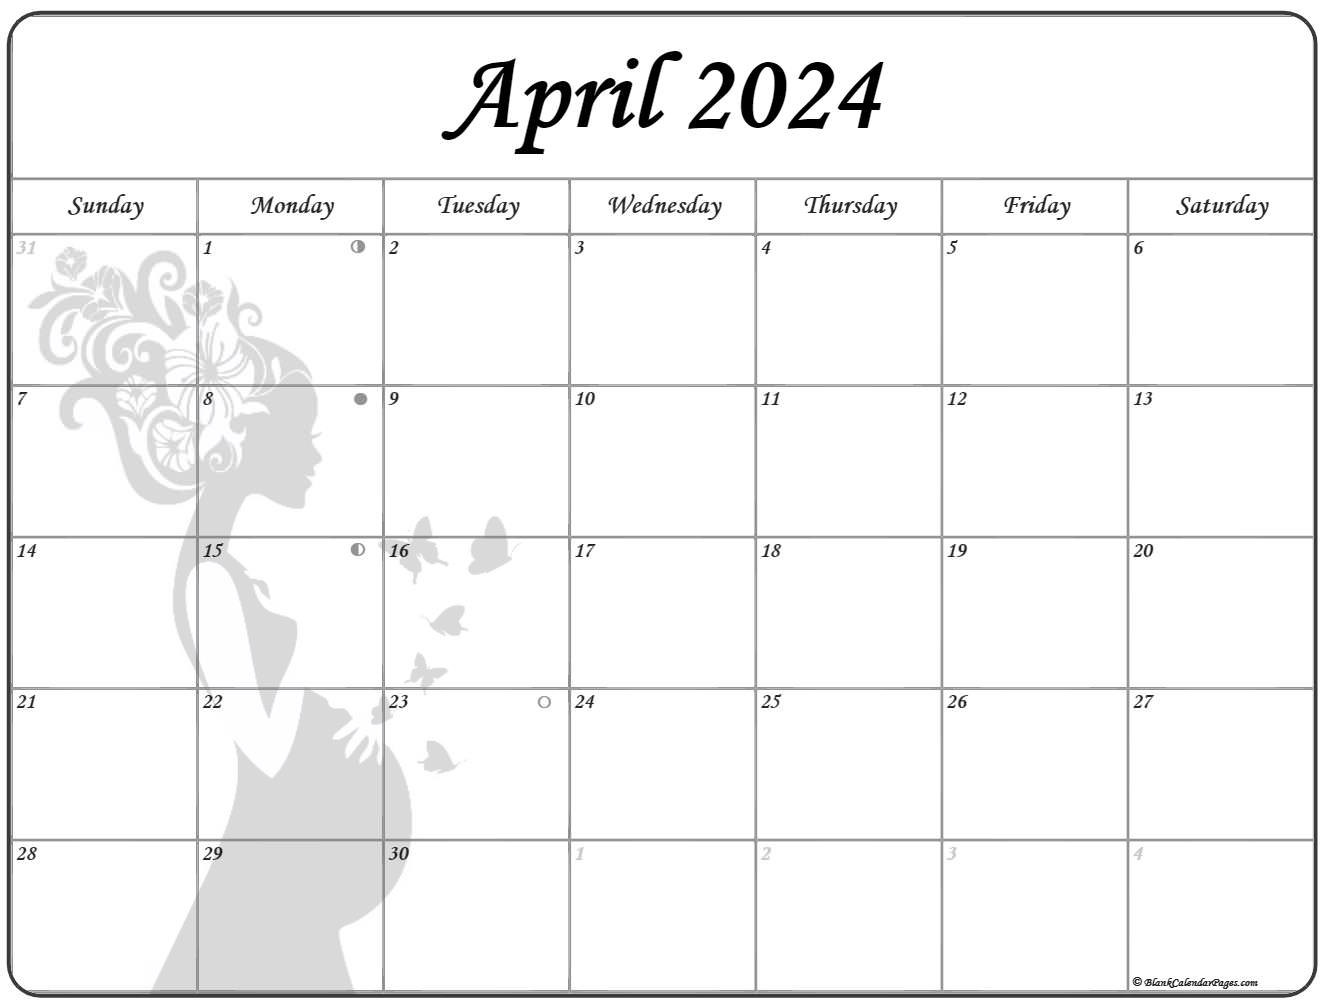 april-2023-calendar-free-printable-calendar-april-2023-blank-calendar